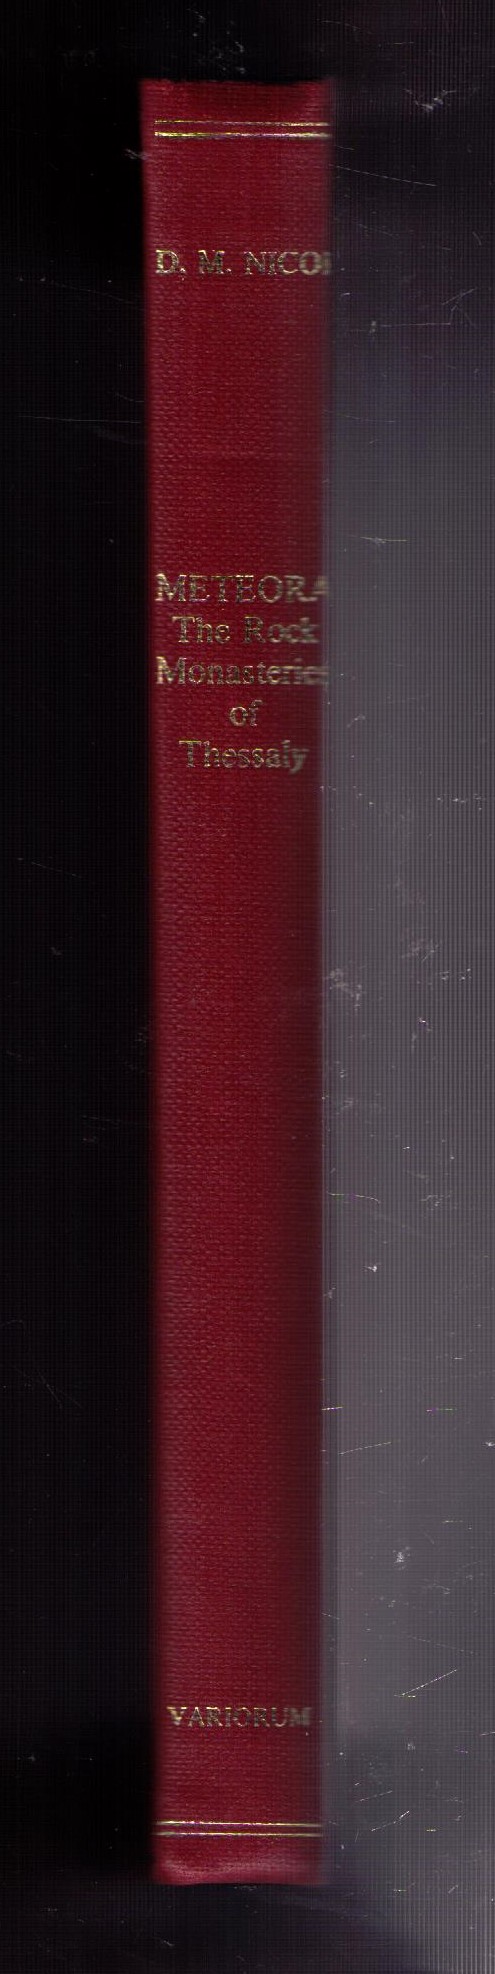 Meteora: The Rock Monasteries of Thessaly. Revised edition. [Variorum facsimile edition] - Nicol, Donald M.